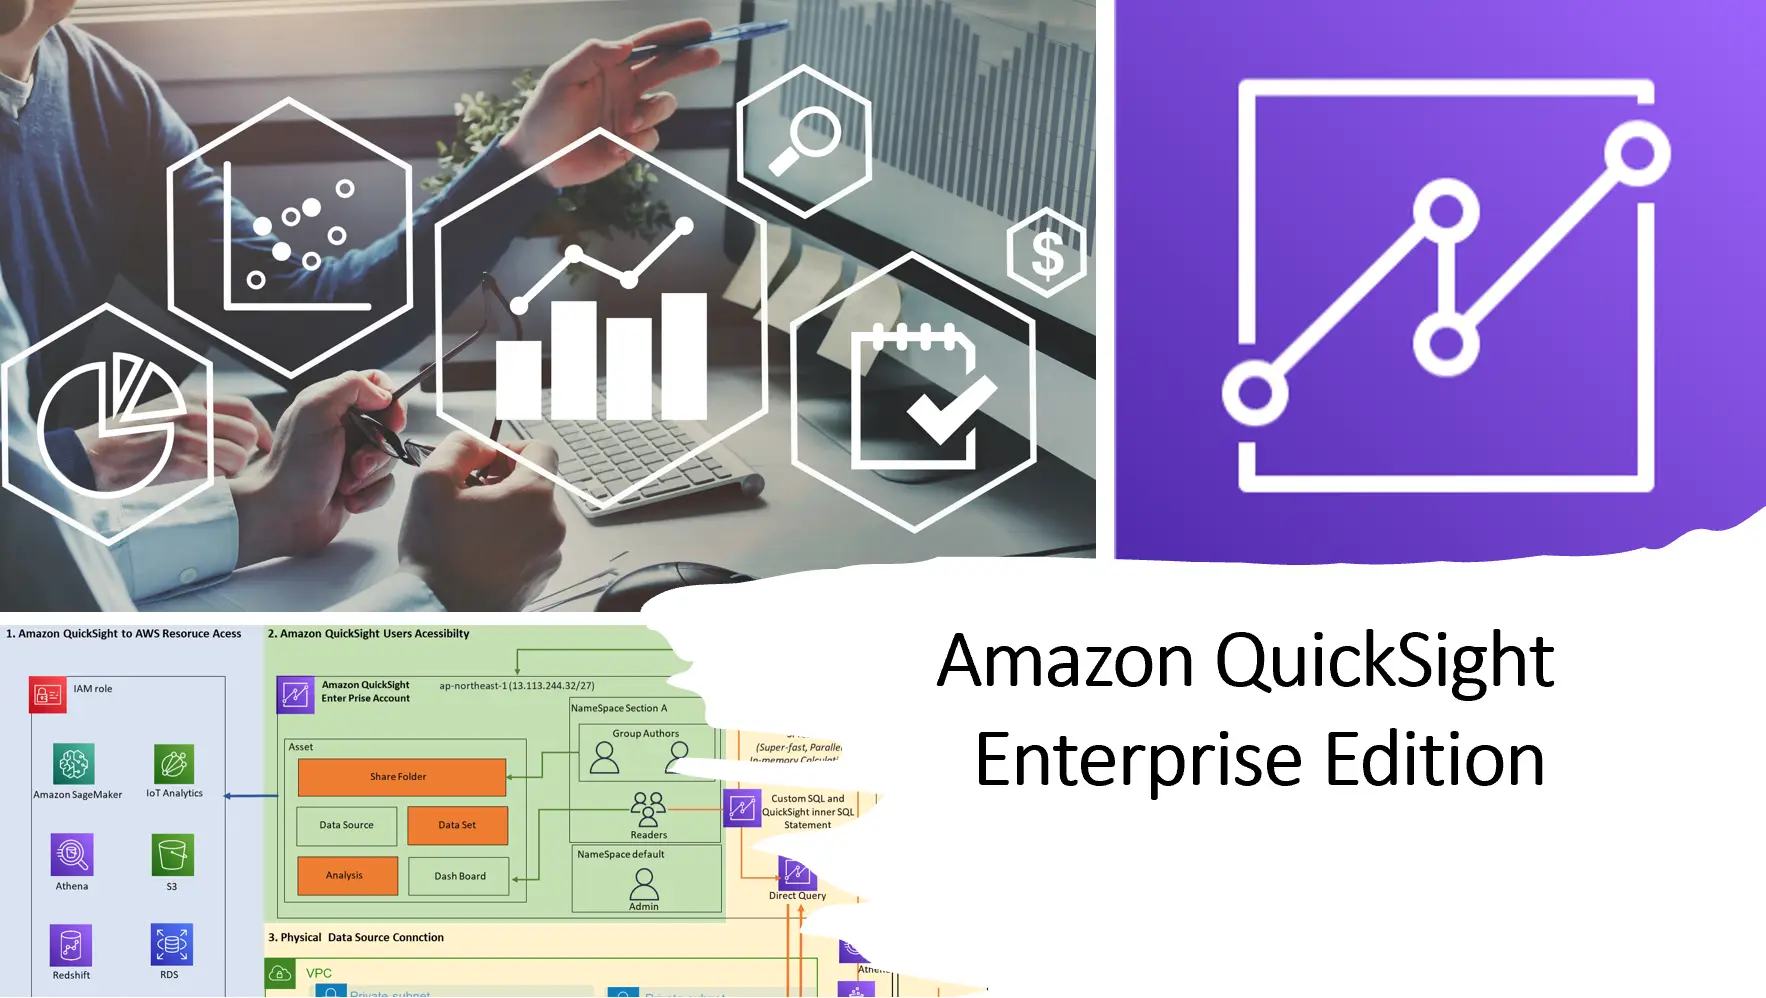 Follow Up to The Amazon QuickSight Enterprise Edition